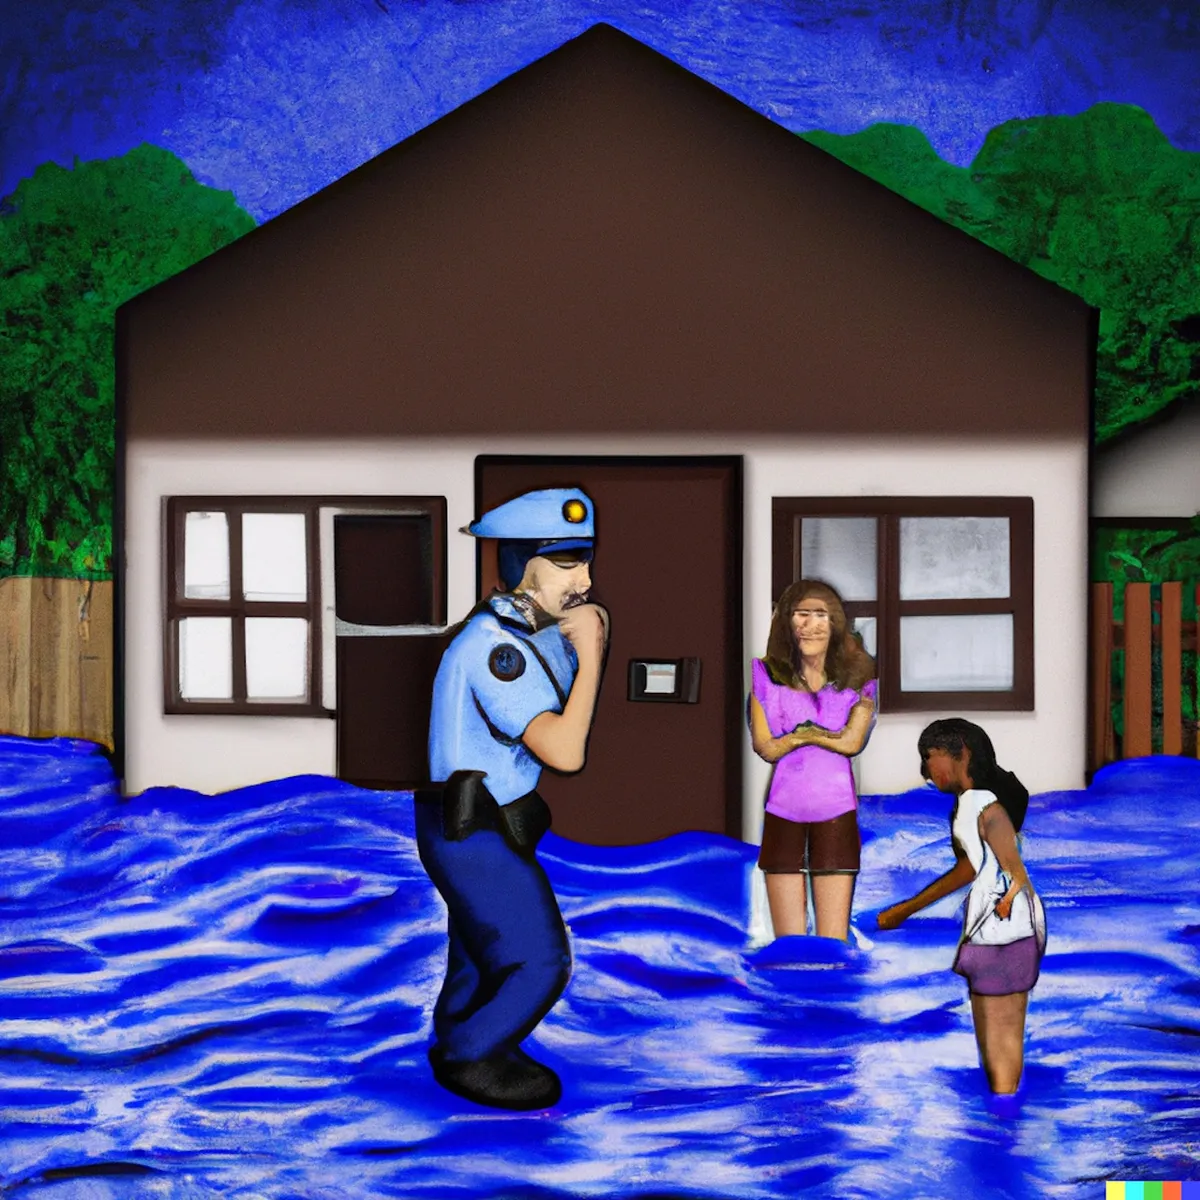 Policeman asking family to evacuate due to floods